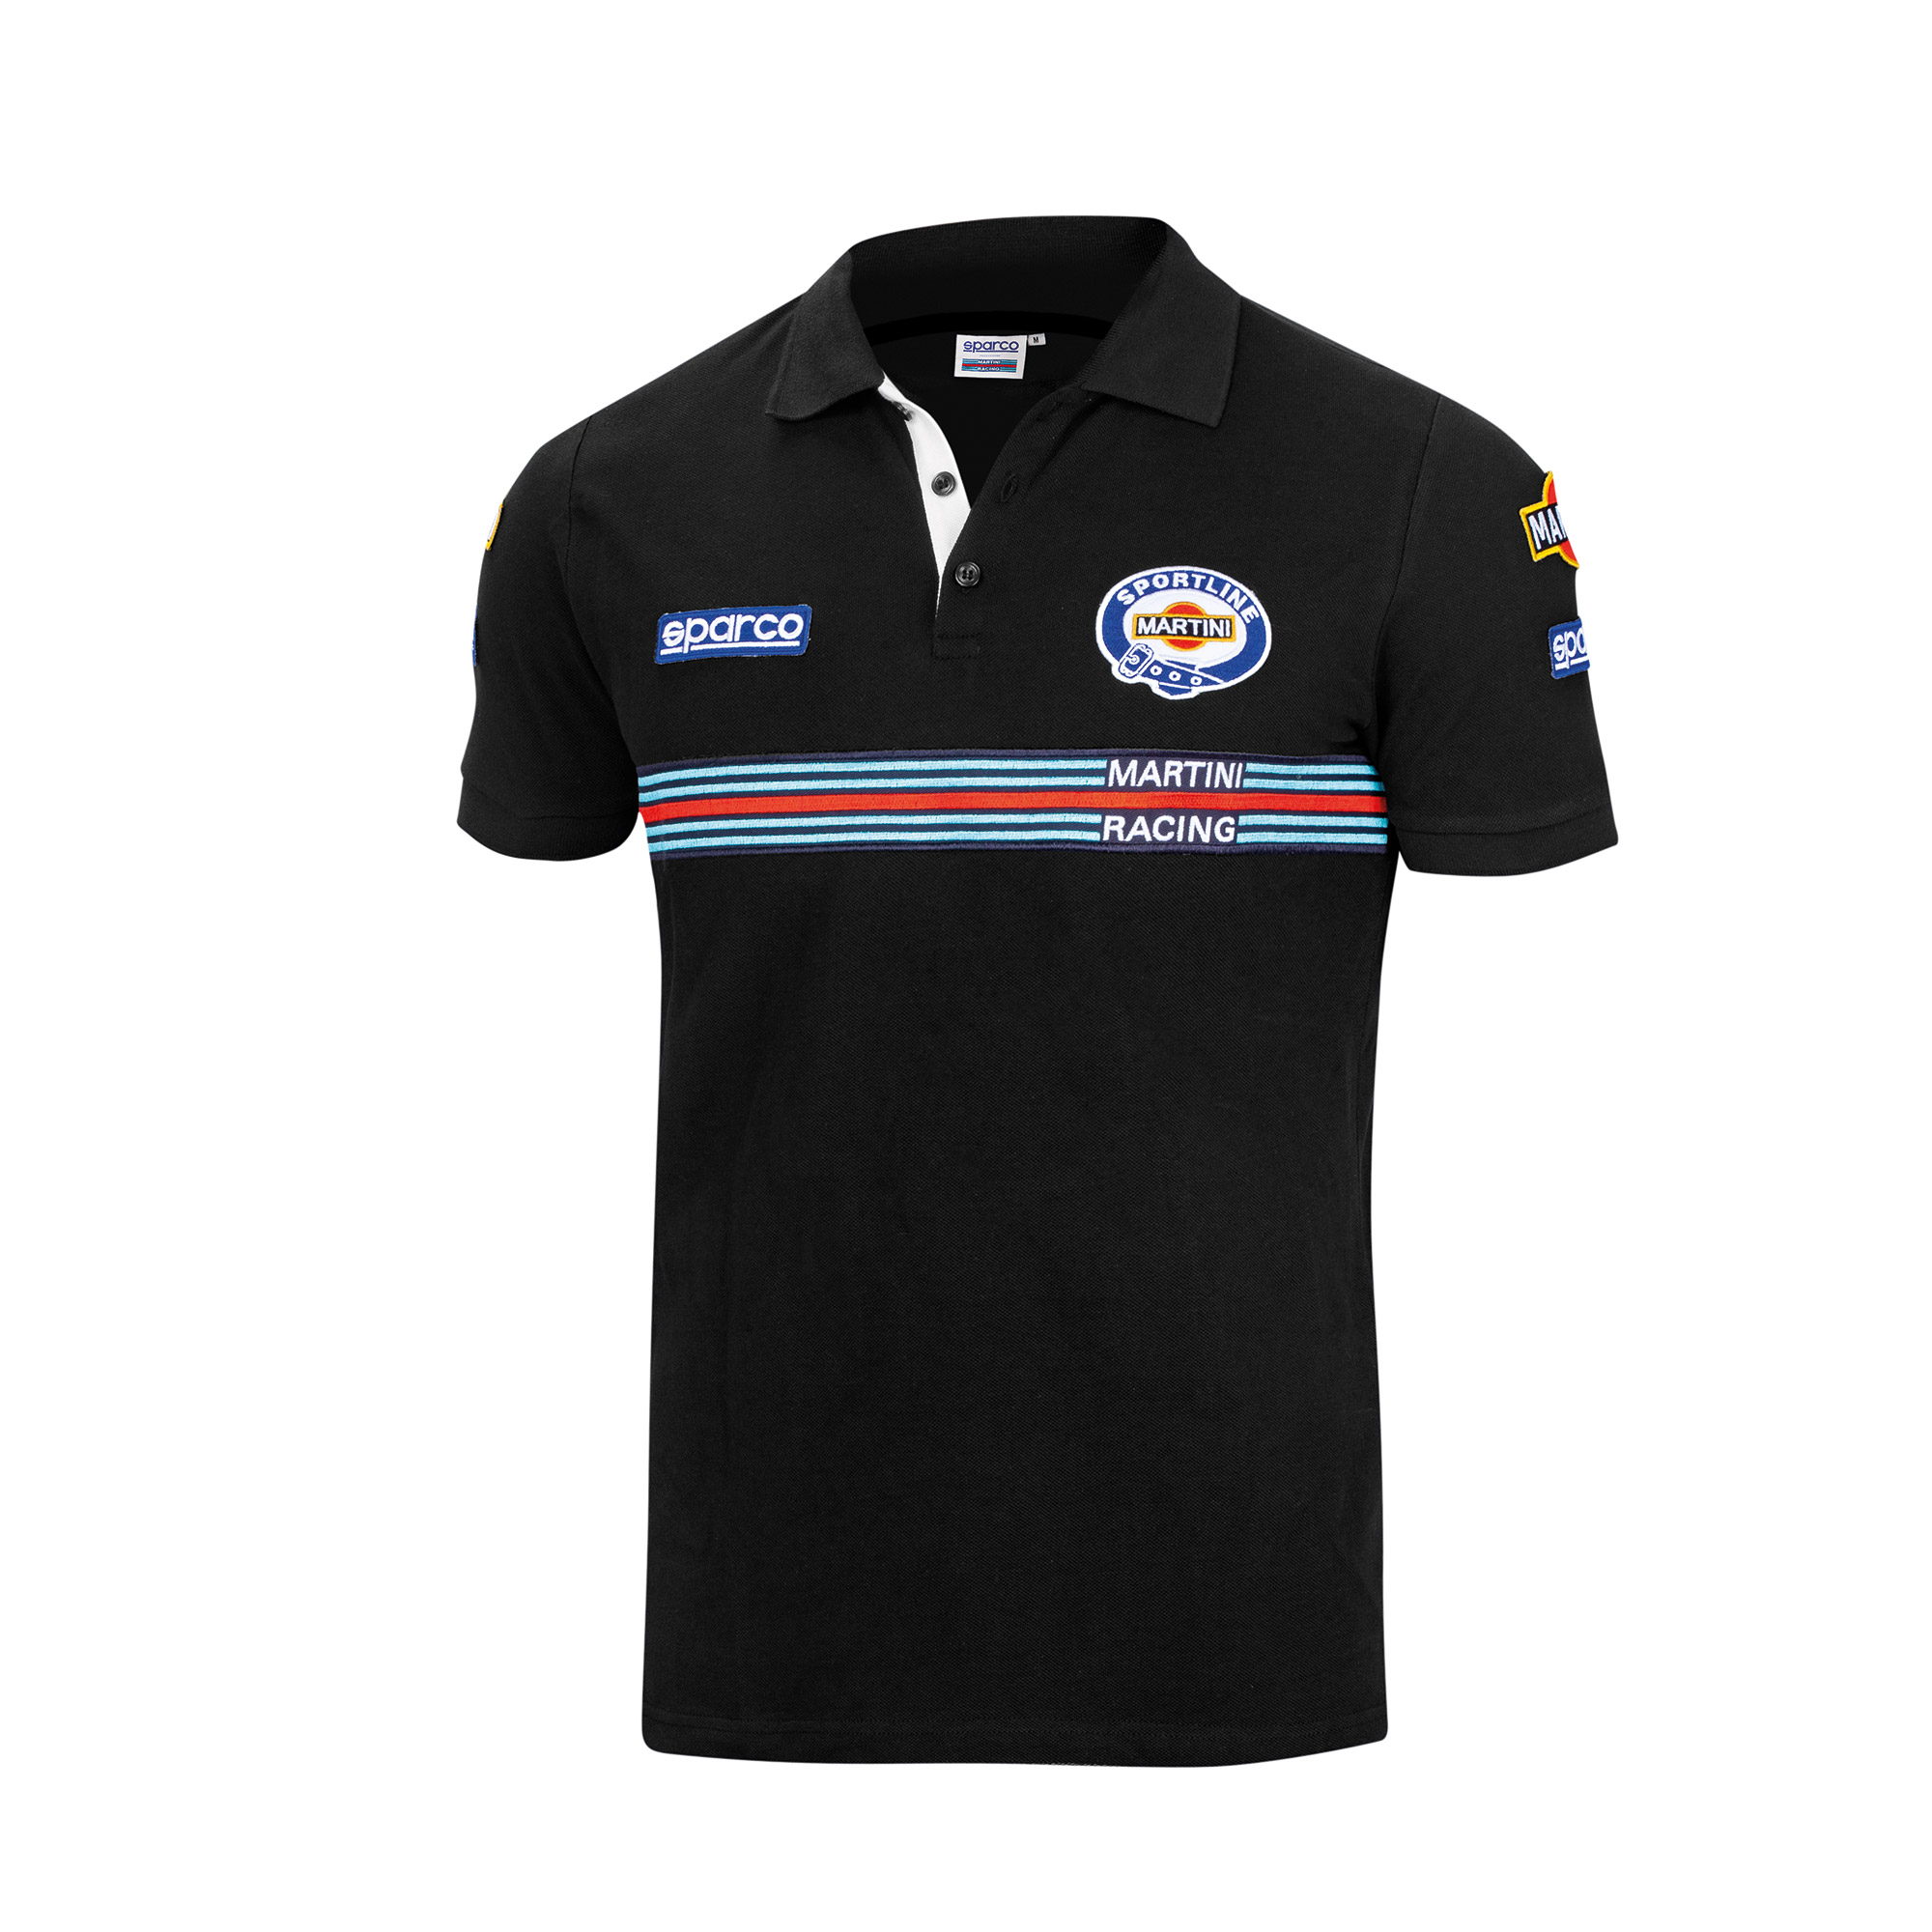 Sparco Martini Racing Polo Shirt Casual Leisure Clothing | eBay